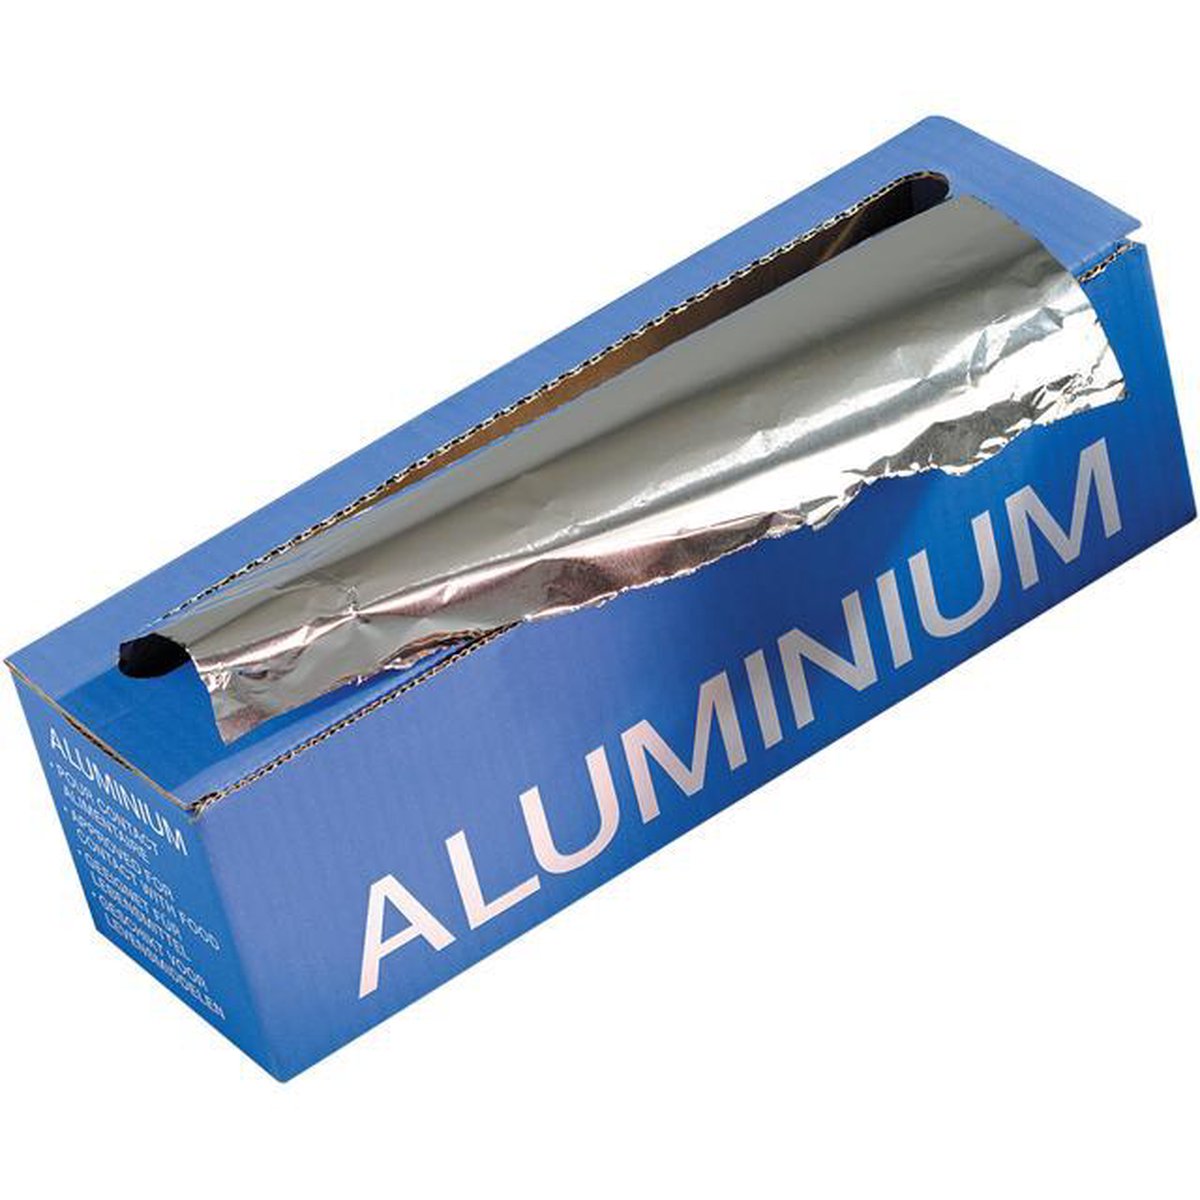 14my Alufolie 45cm x 145m 4 Rollen Aluminiumfolie 